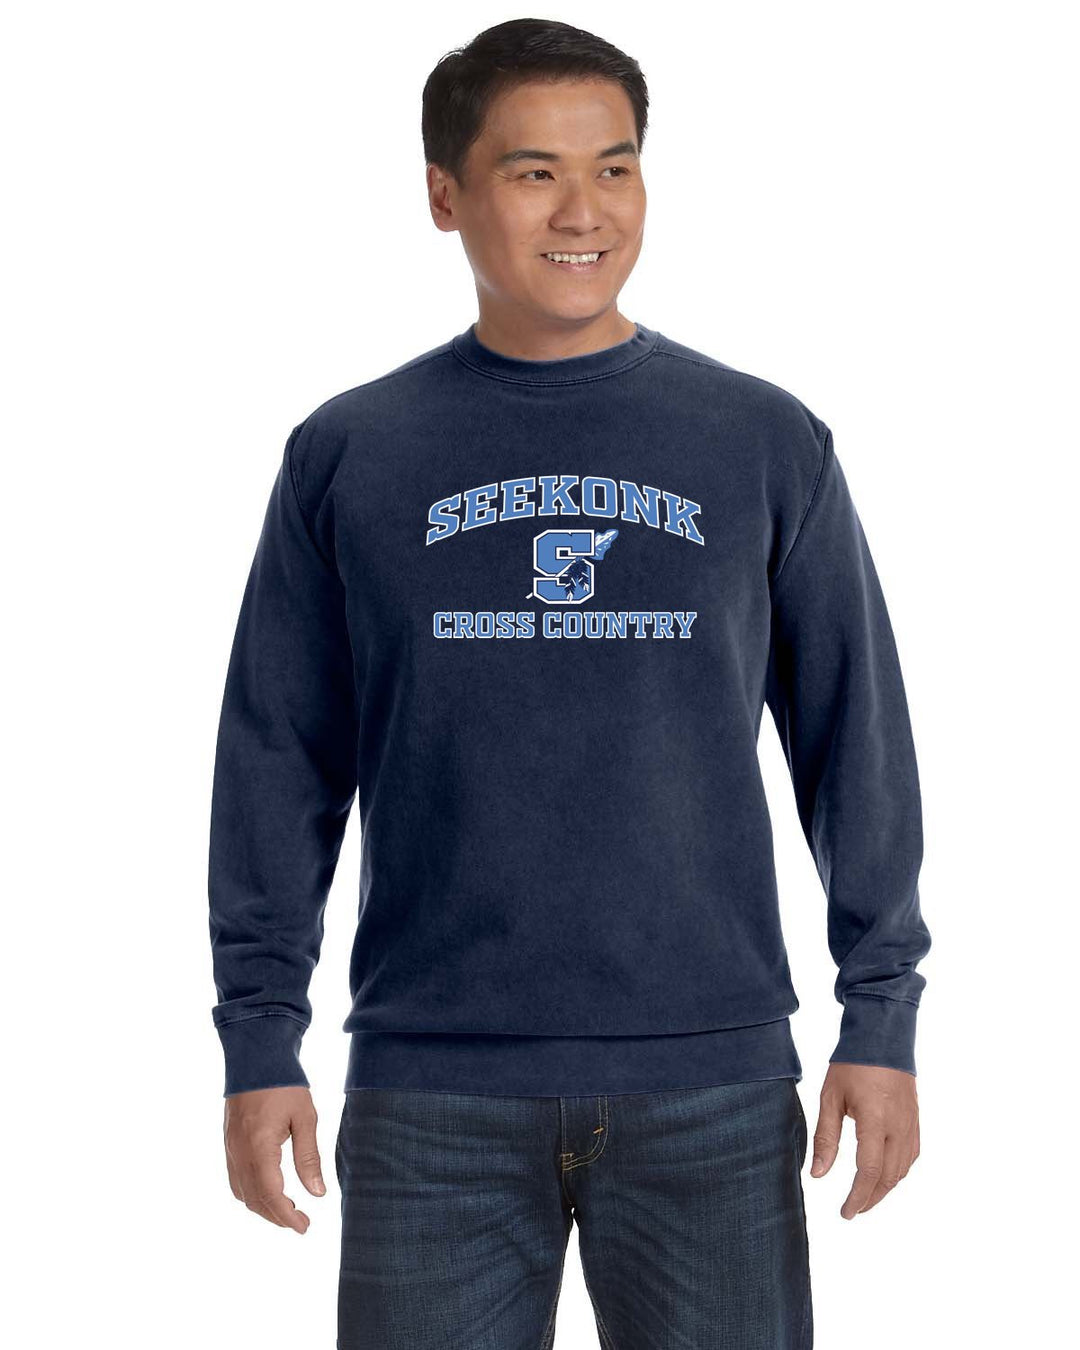 Seekonk Cross Country Adult Crewneck Sweatshirt (1566)